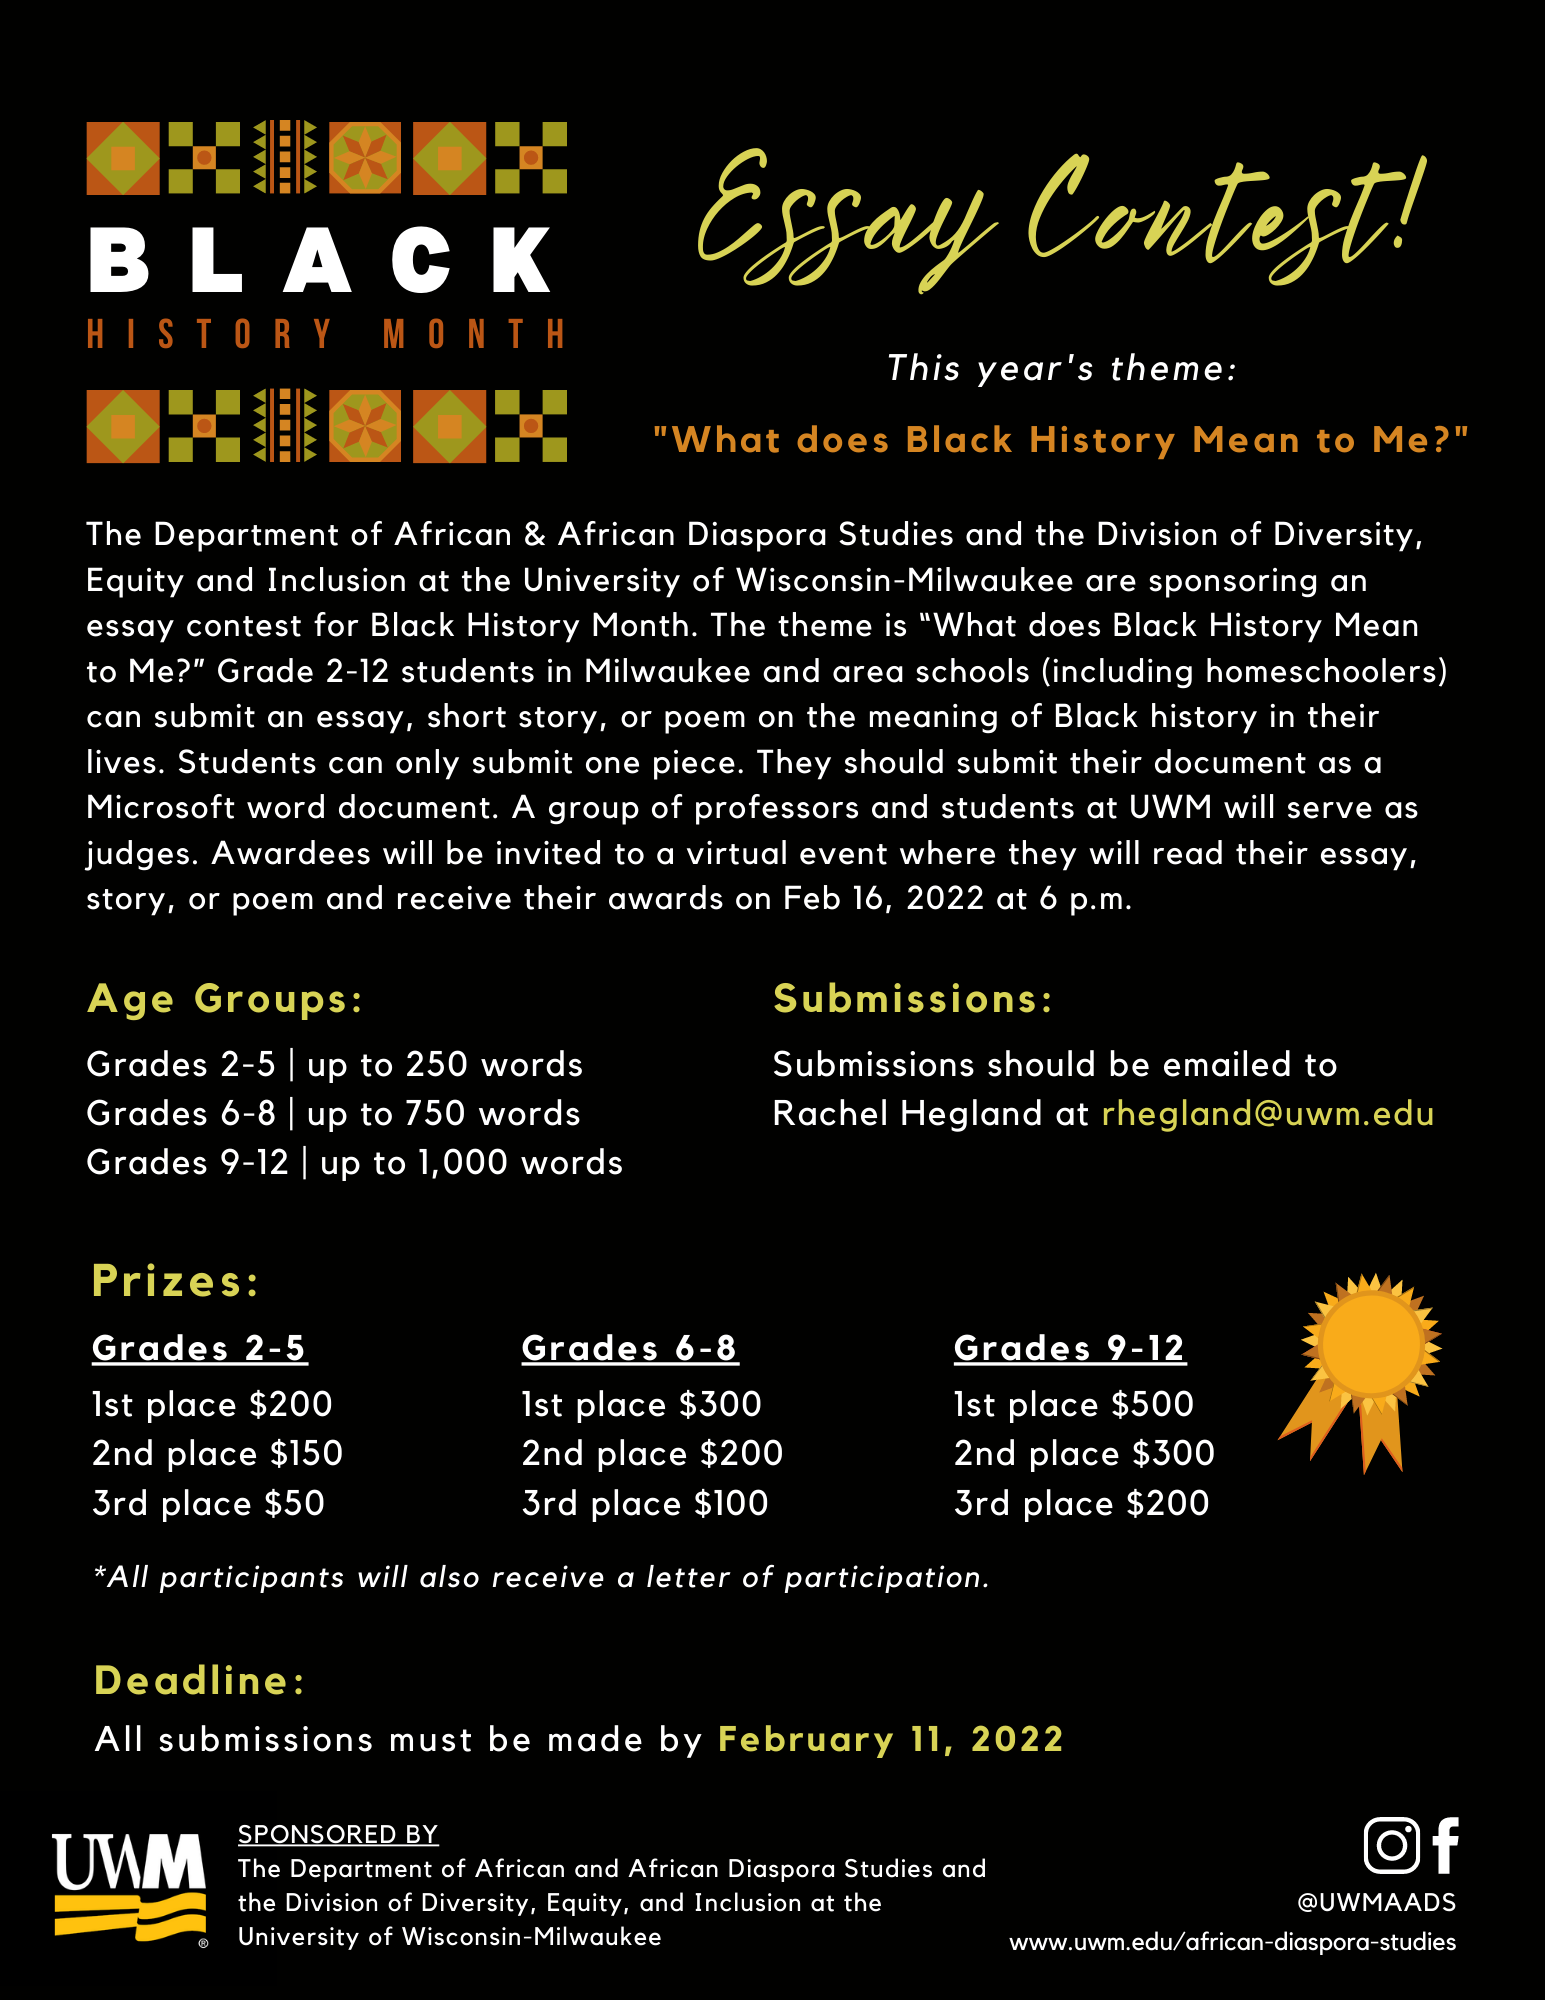 ravens black history month essay contest